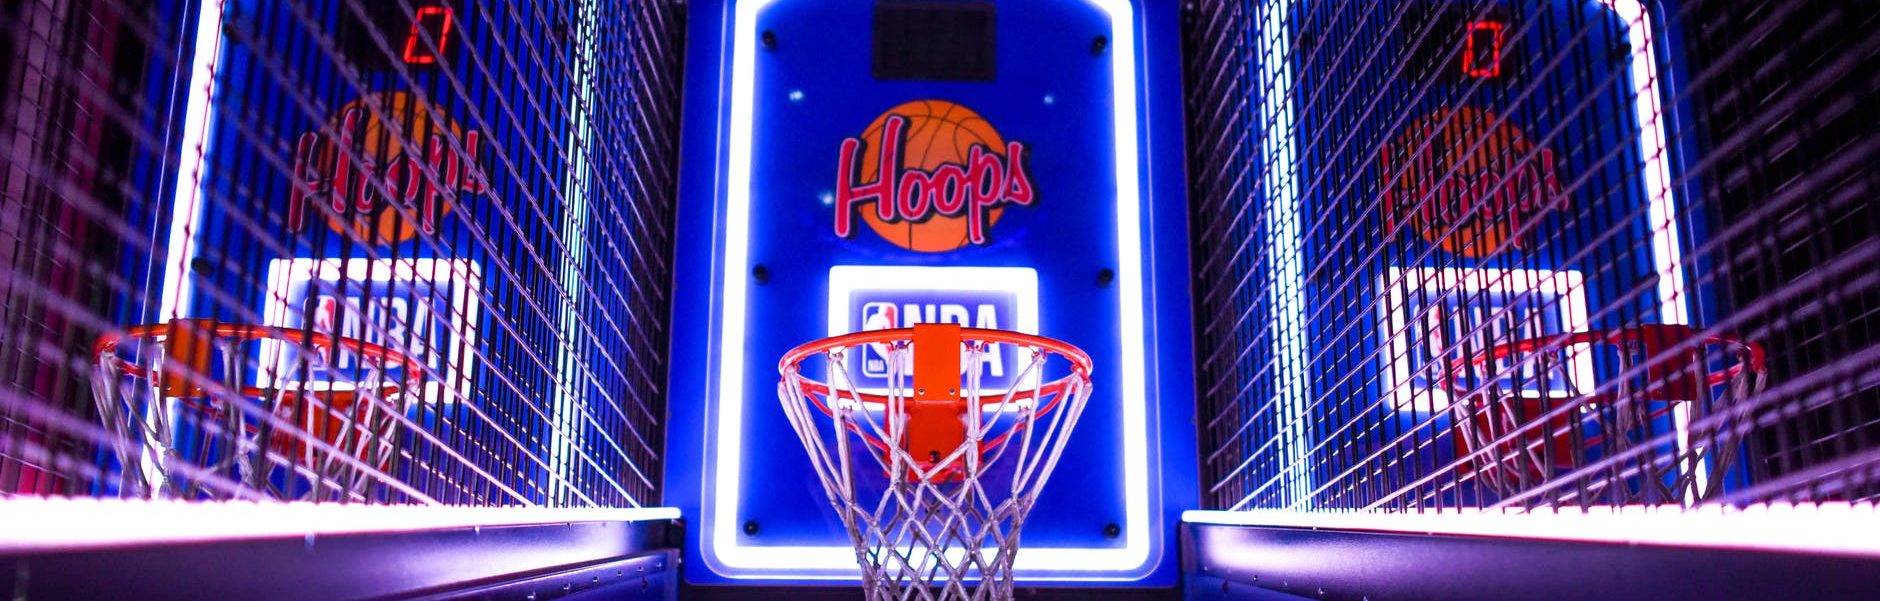 closeup photo of basketball arcade